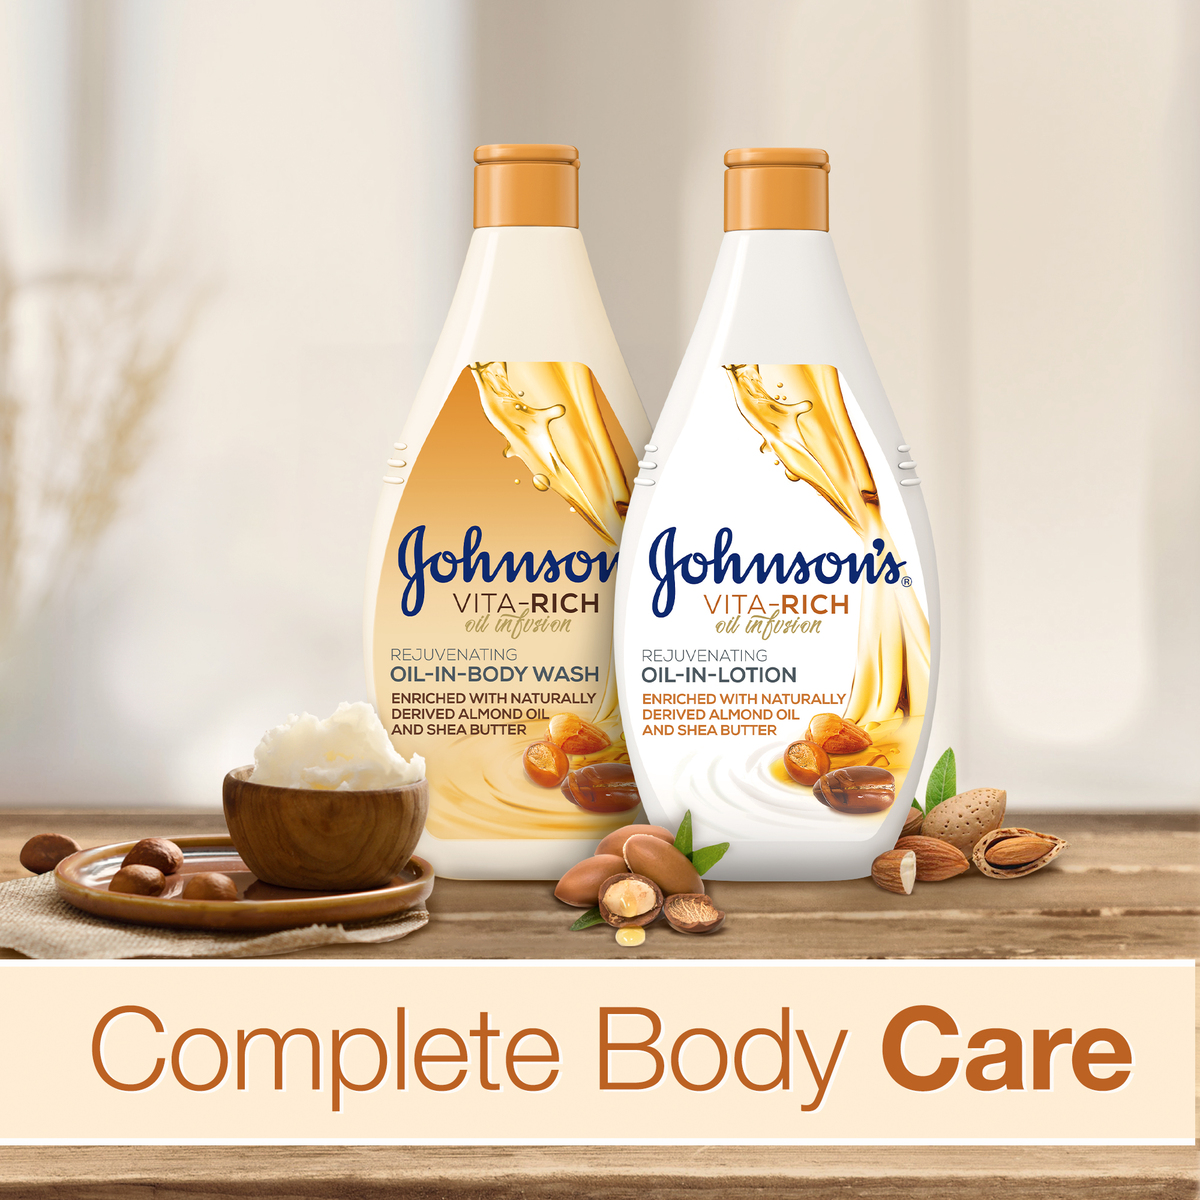 Johnson's Body Wash Vita-Rich Oil-In-Body Wash Rejuvenating 400ml